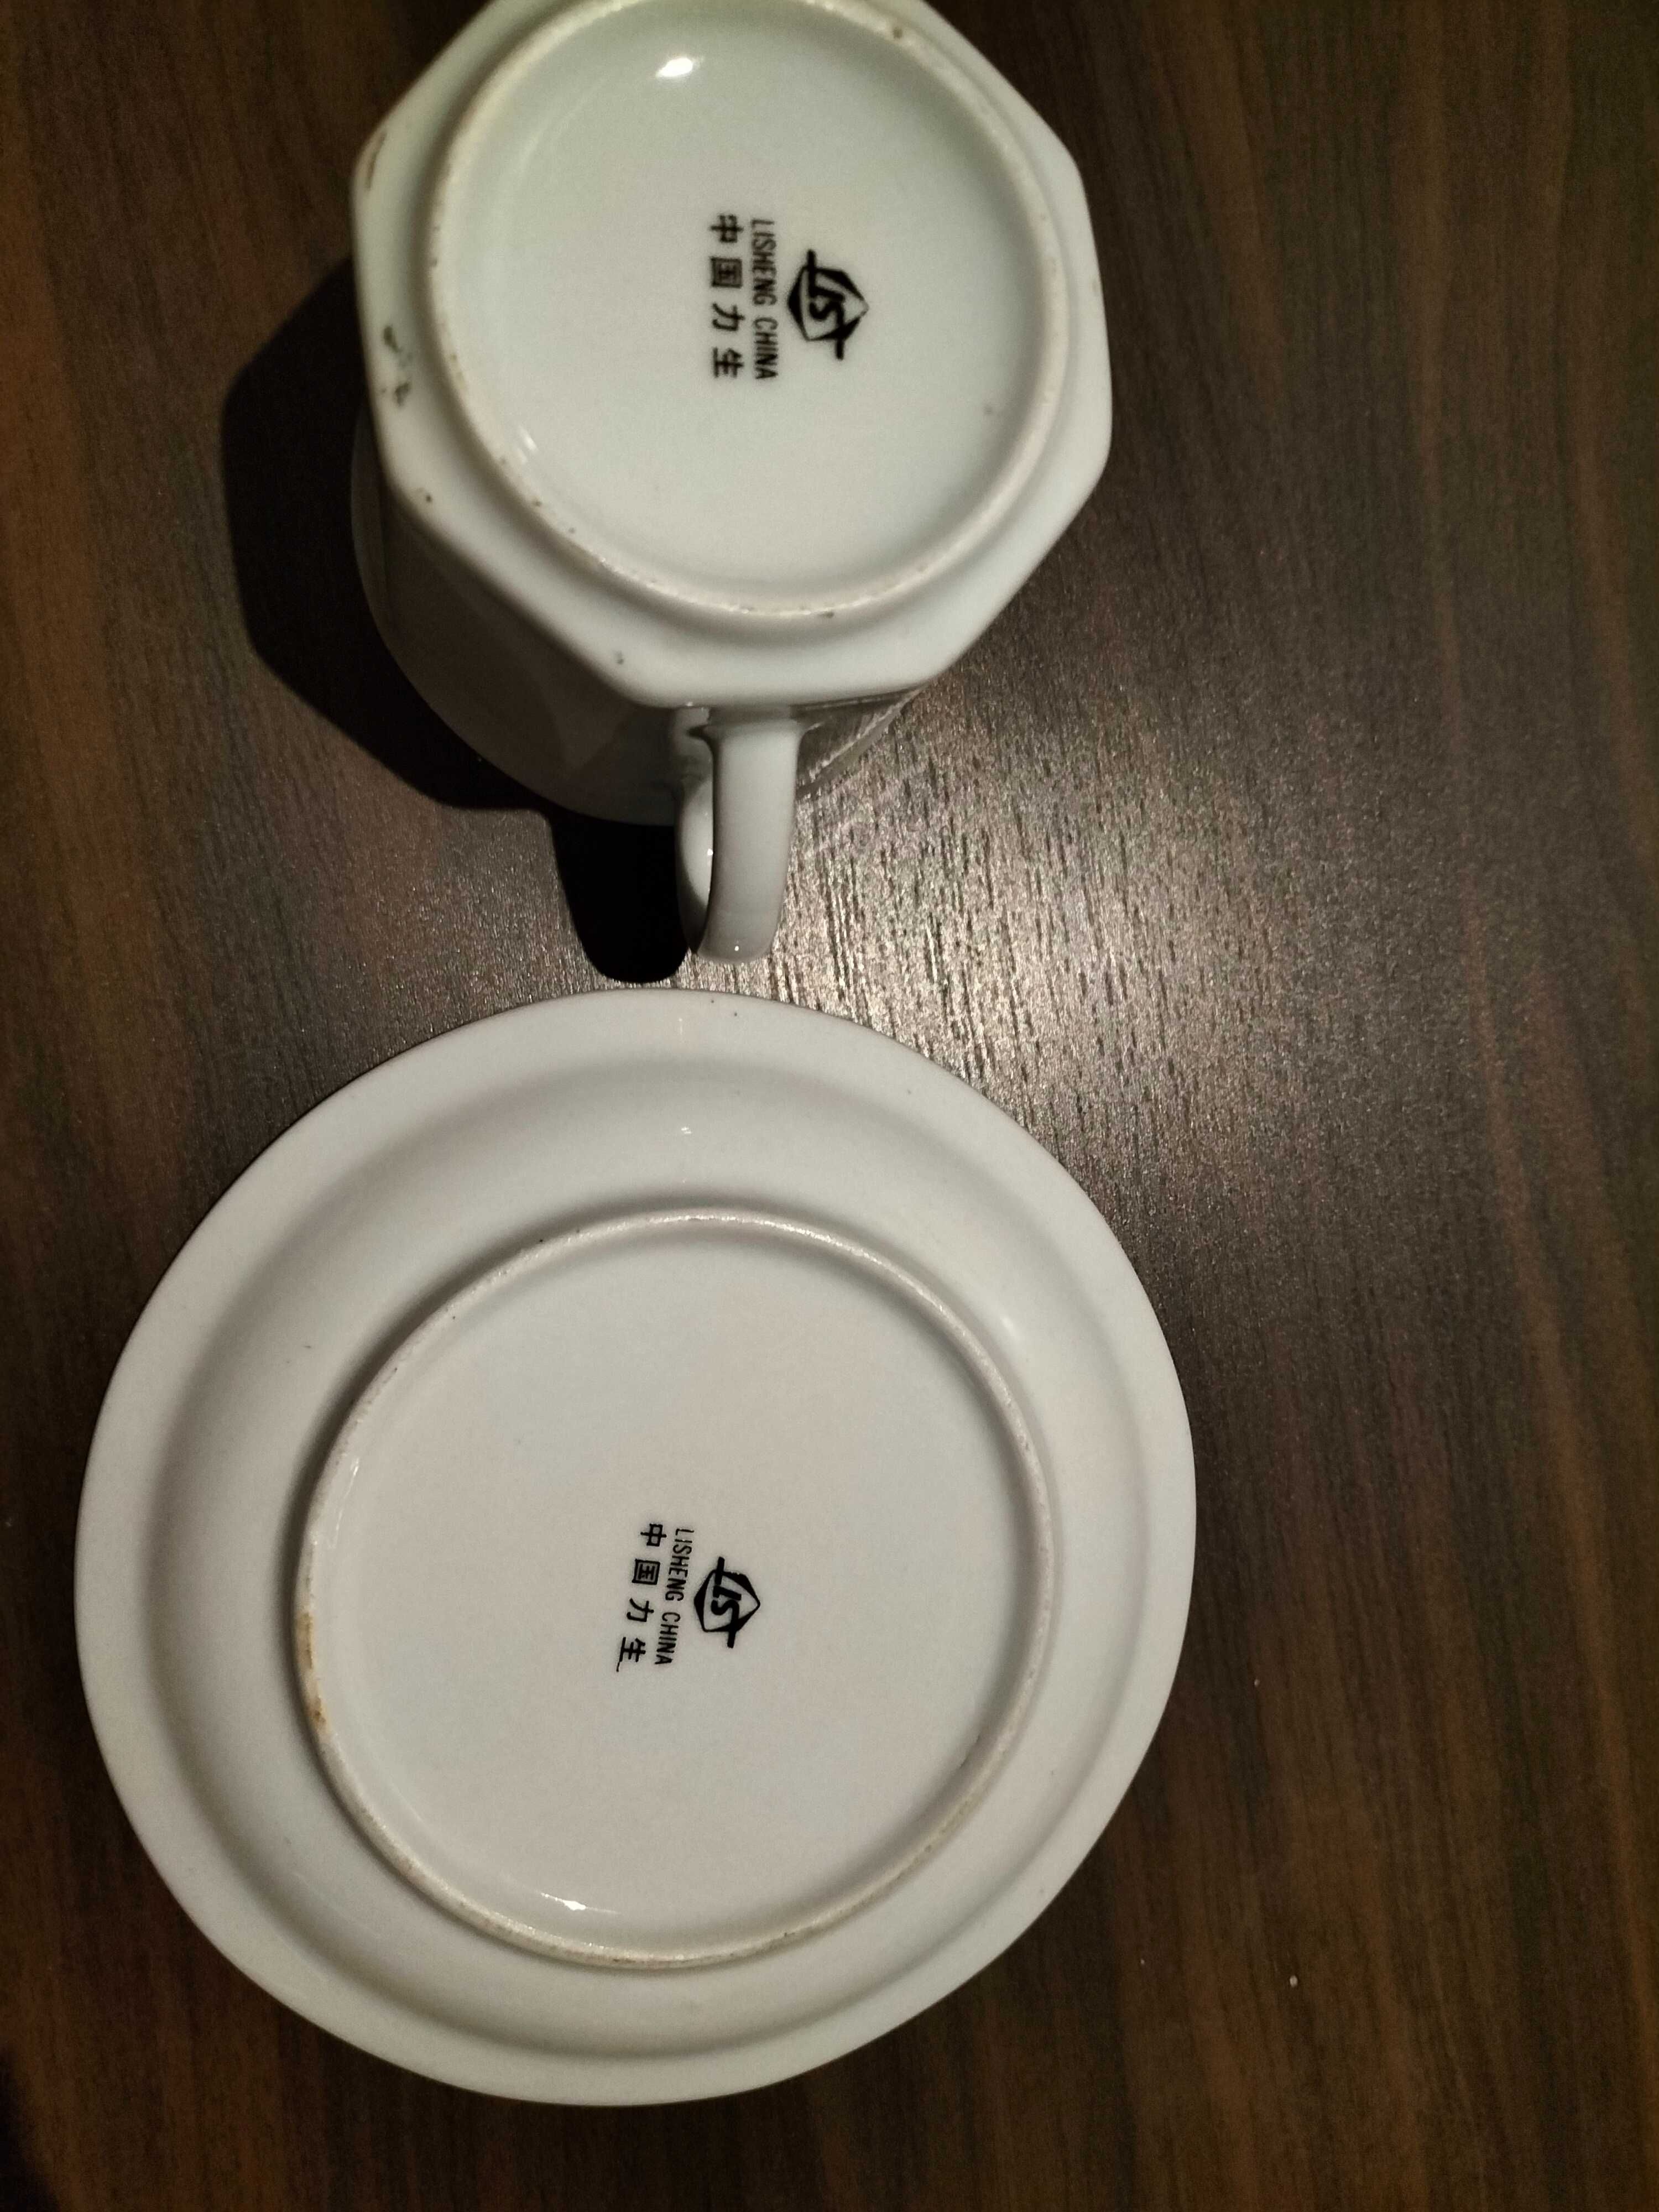 Chávena de chá - porcelana chinesa